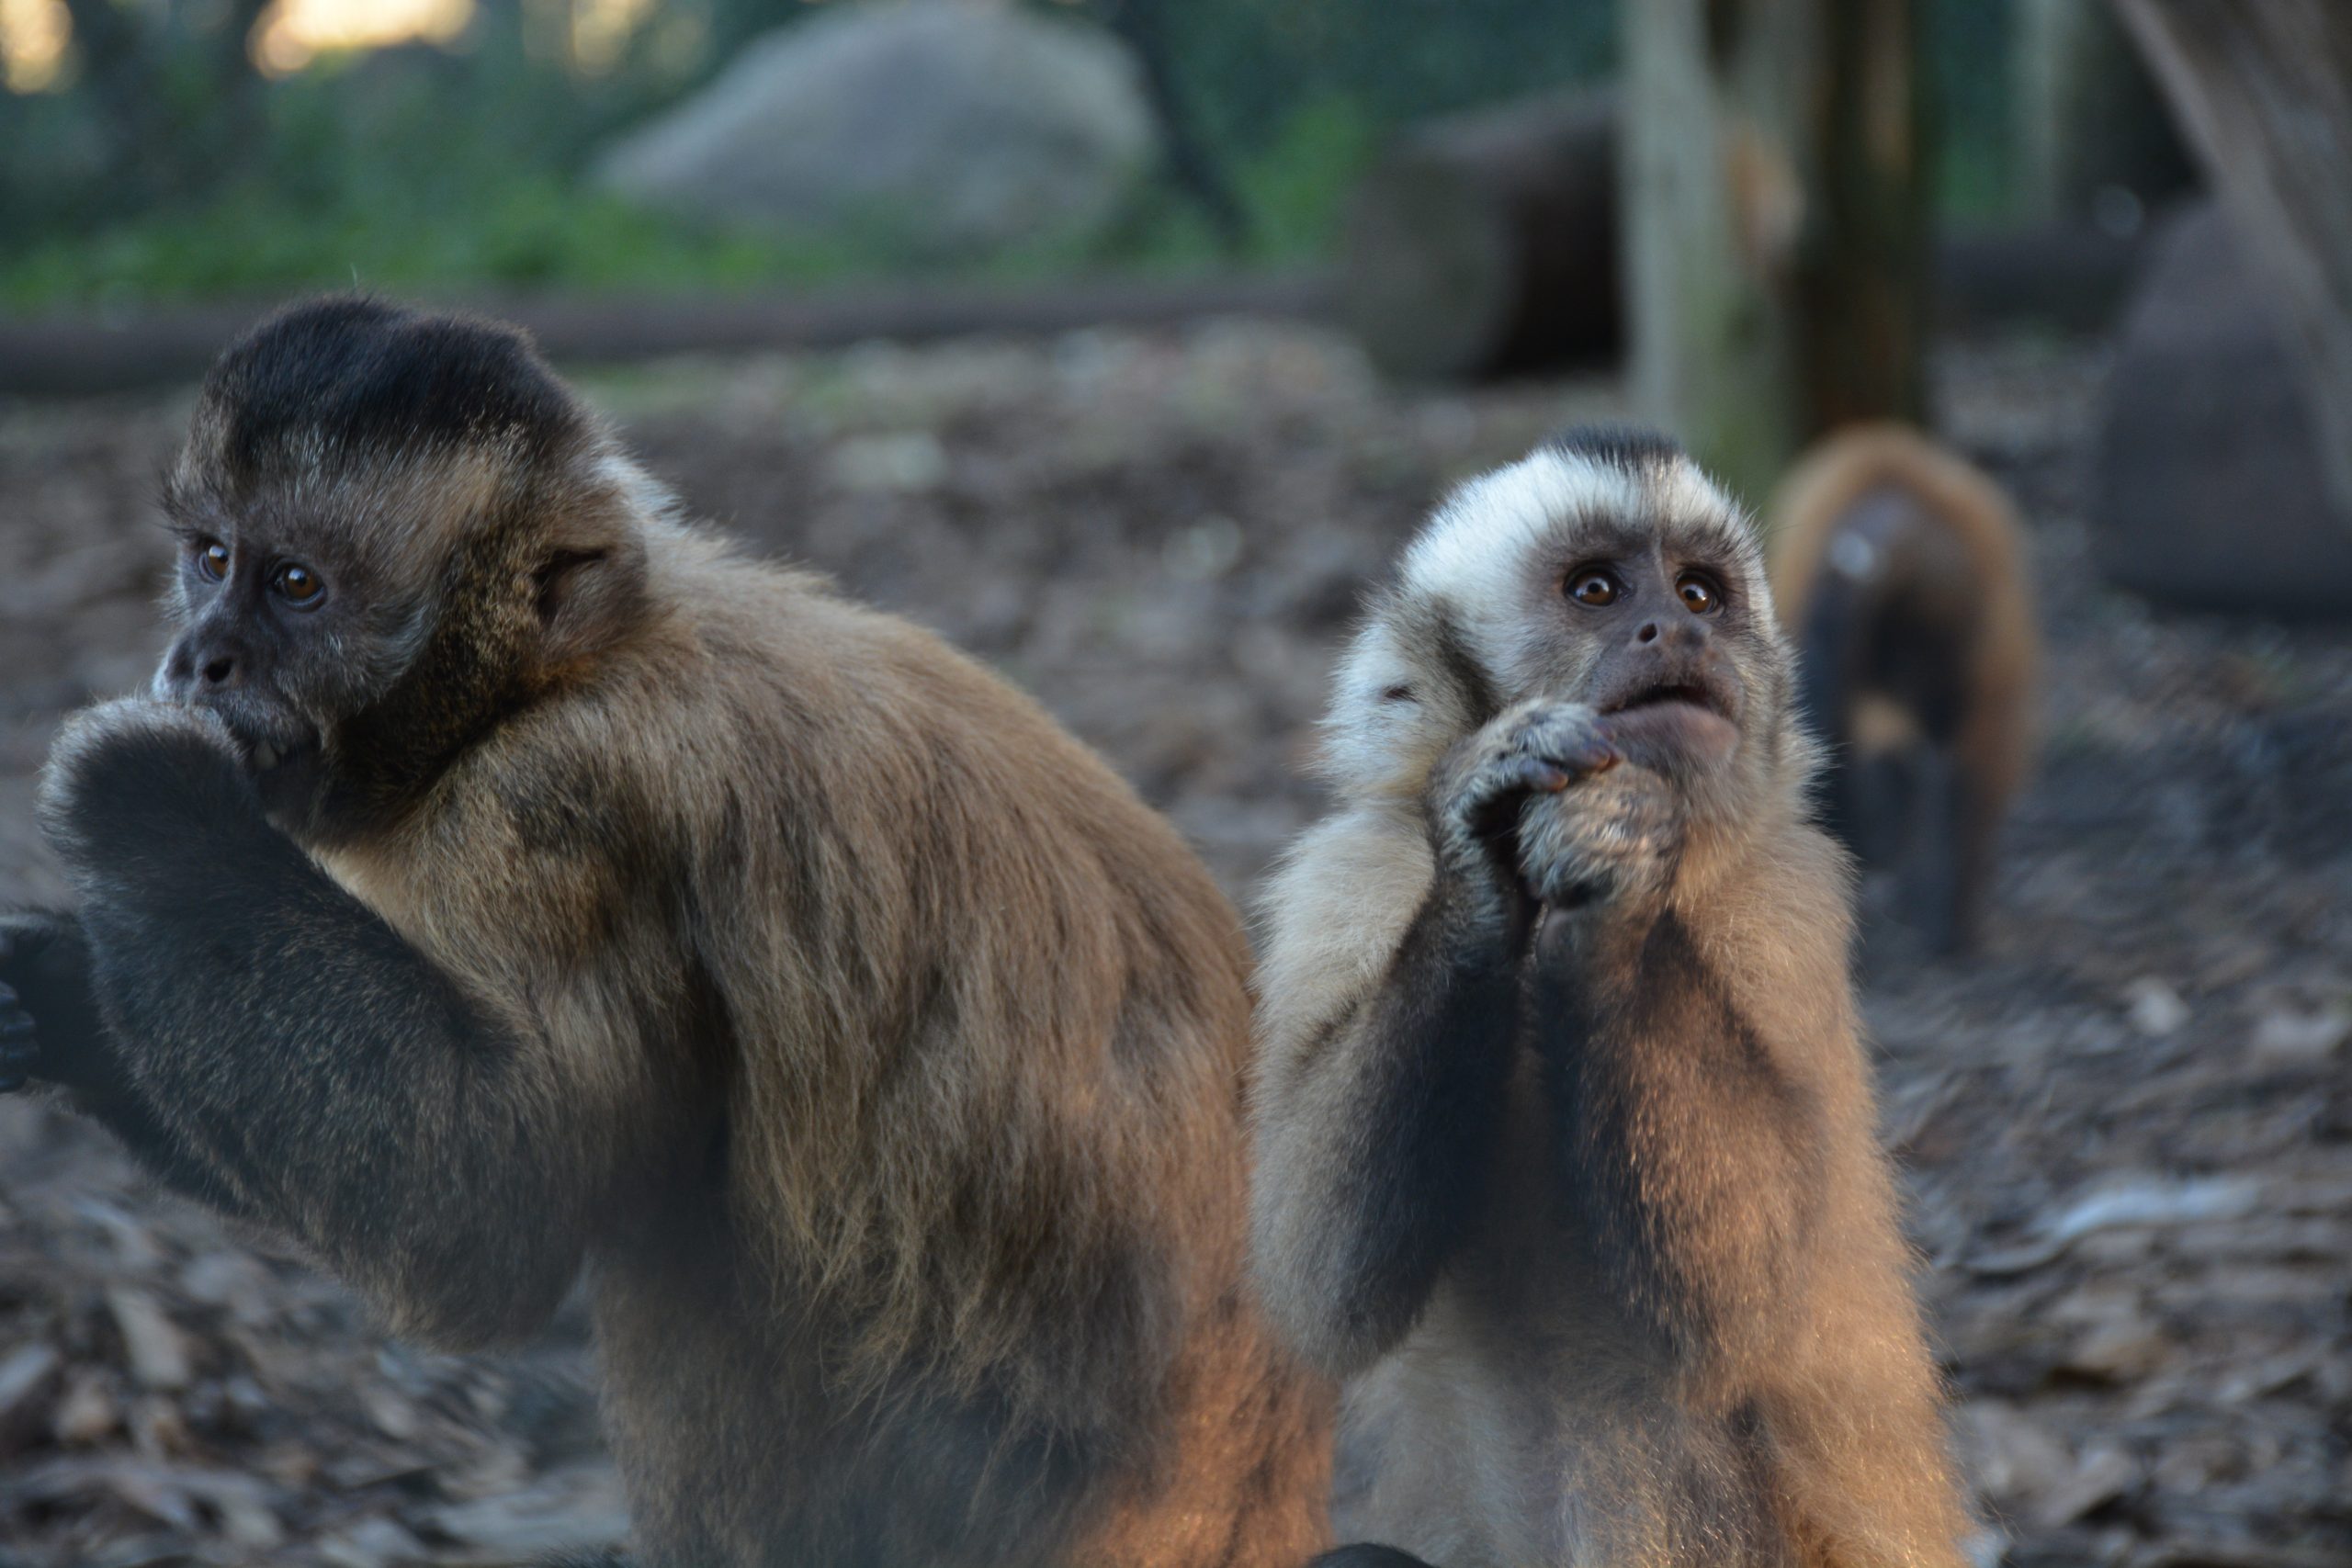 Odsherred Zoo Rescue capuchin